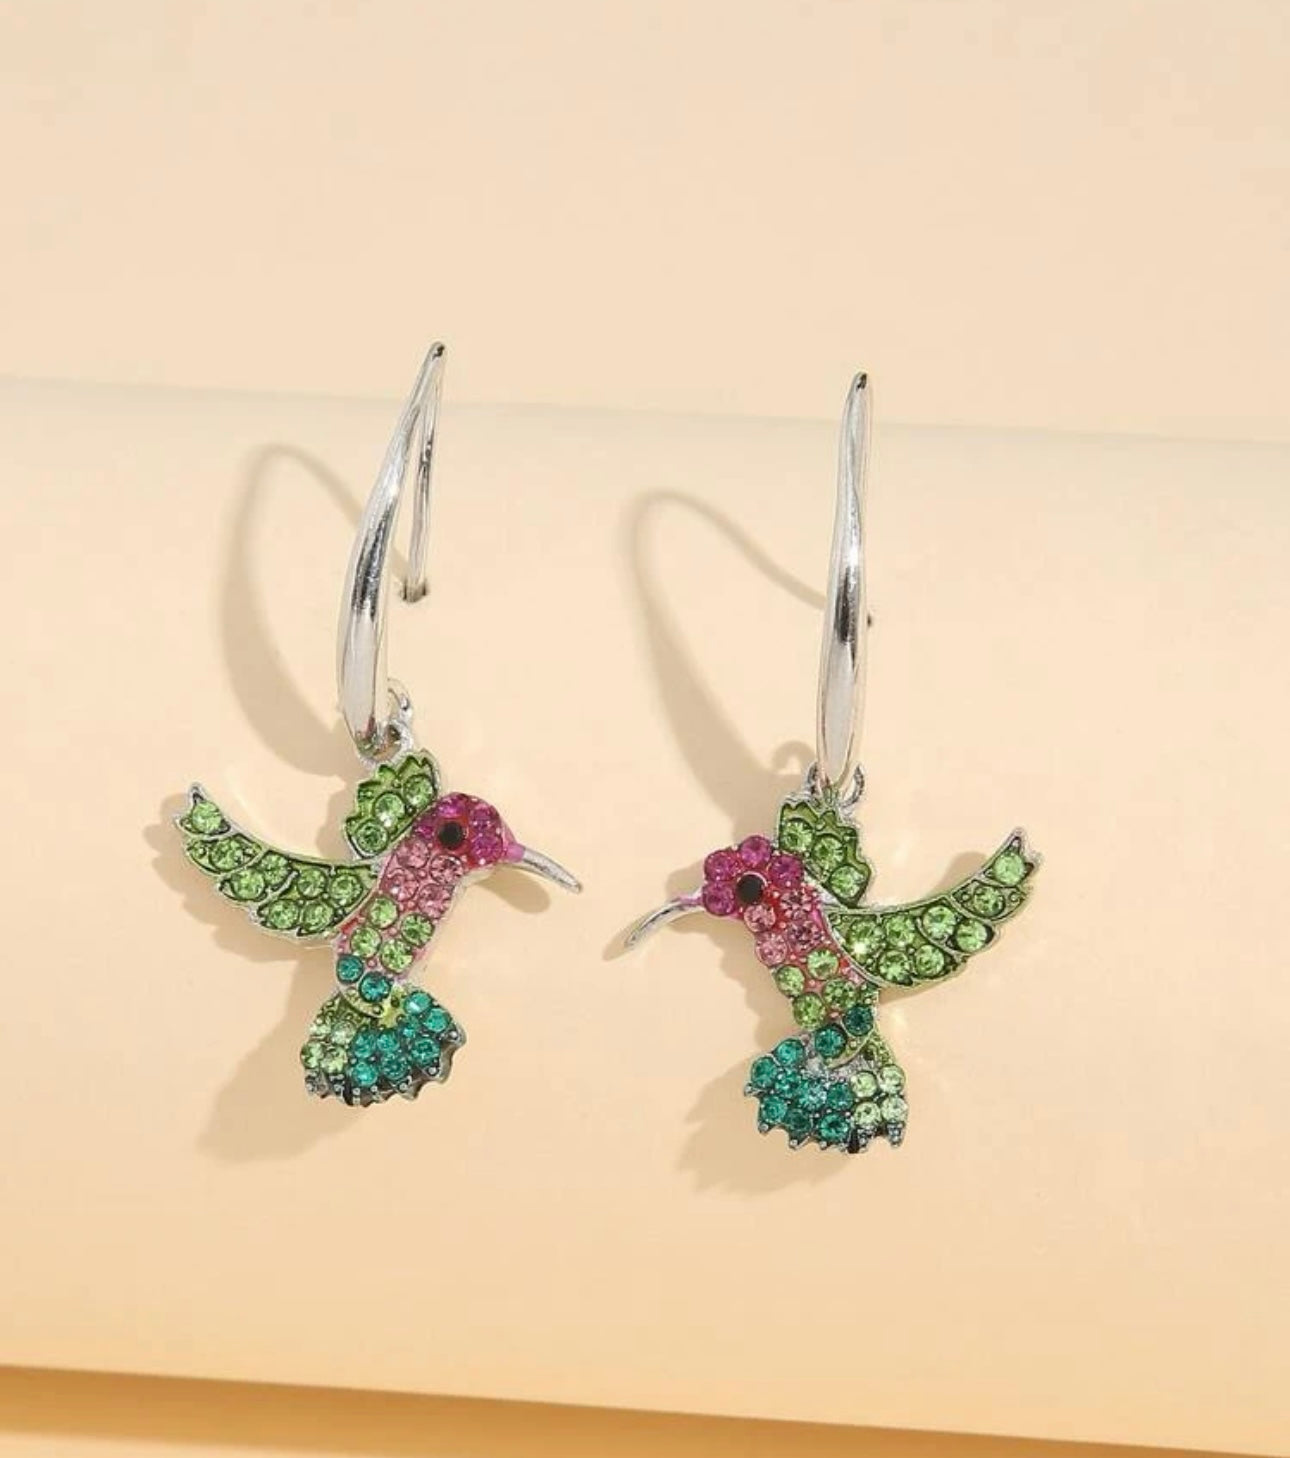 Humming bird earrings